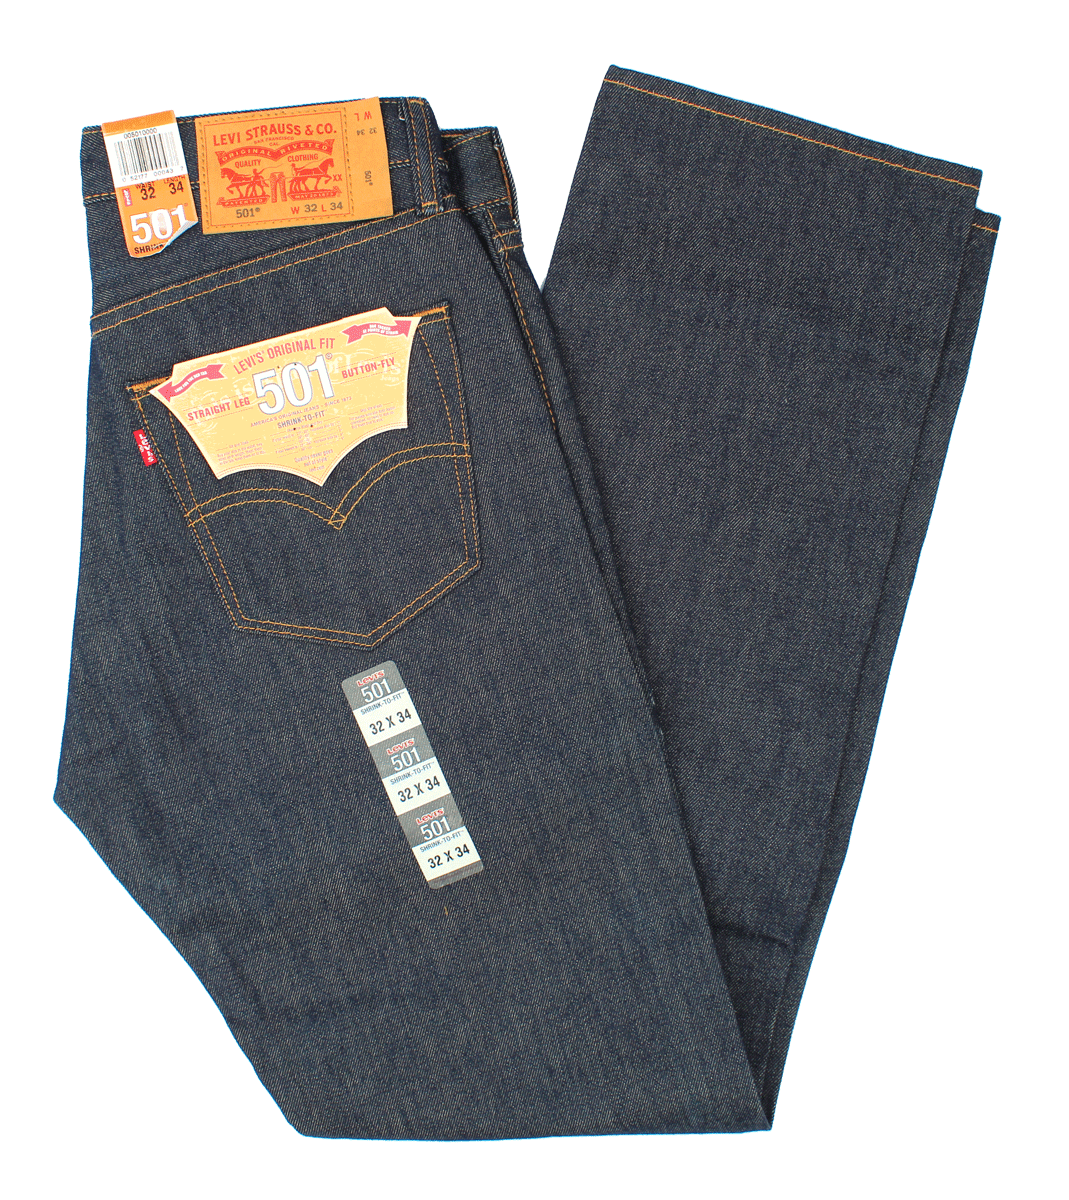 Levis 501 Original Shrink To Fit Jeans 